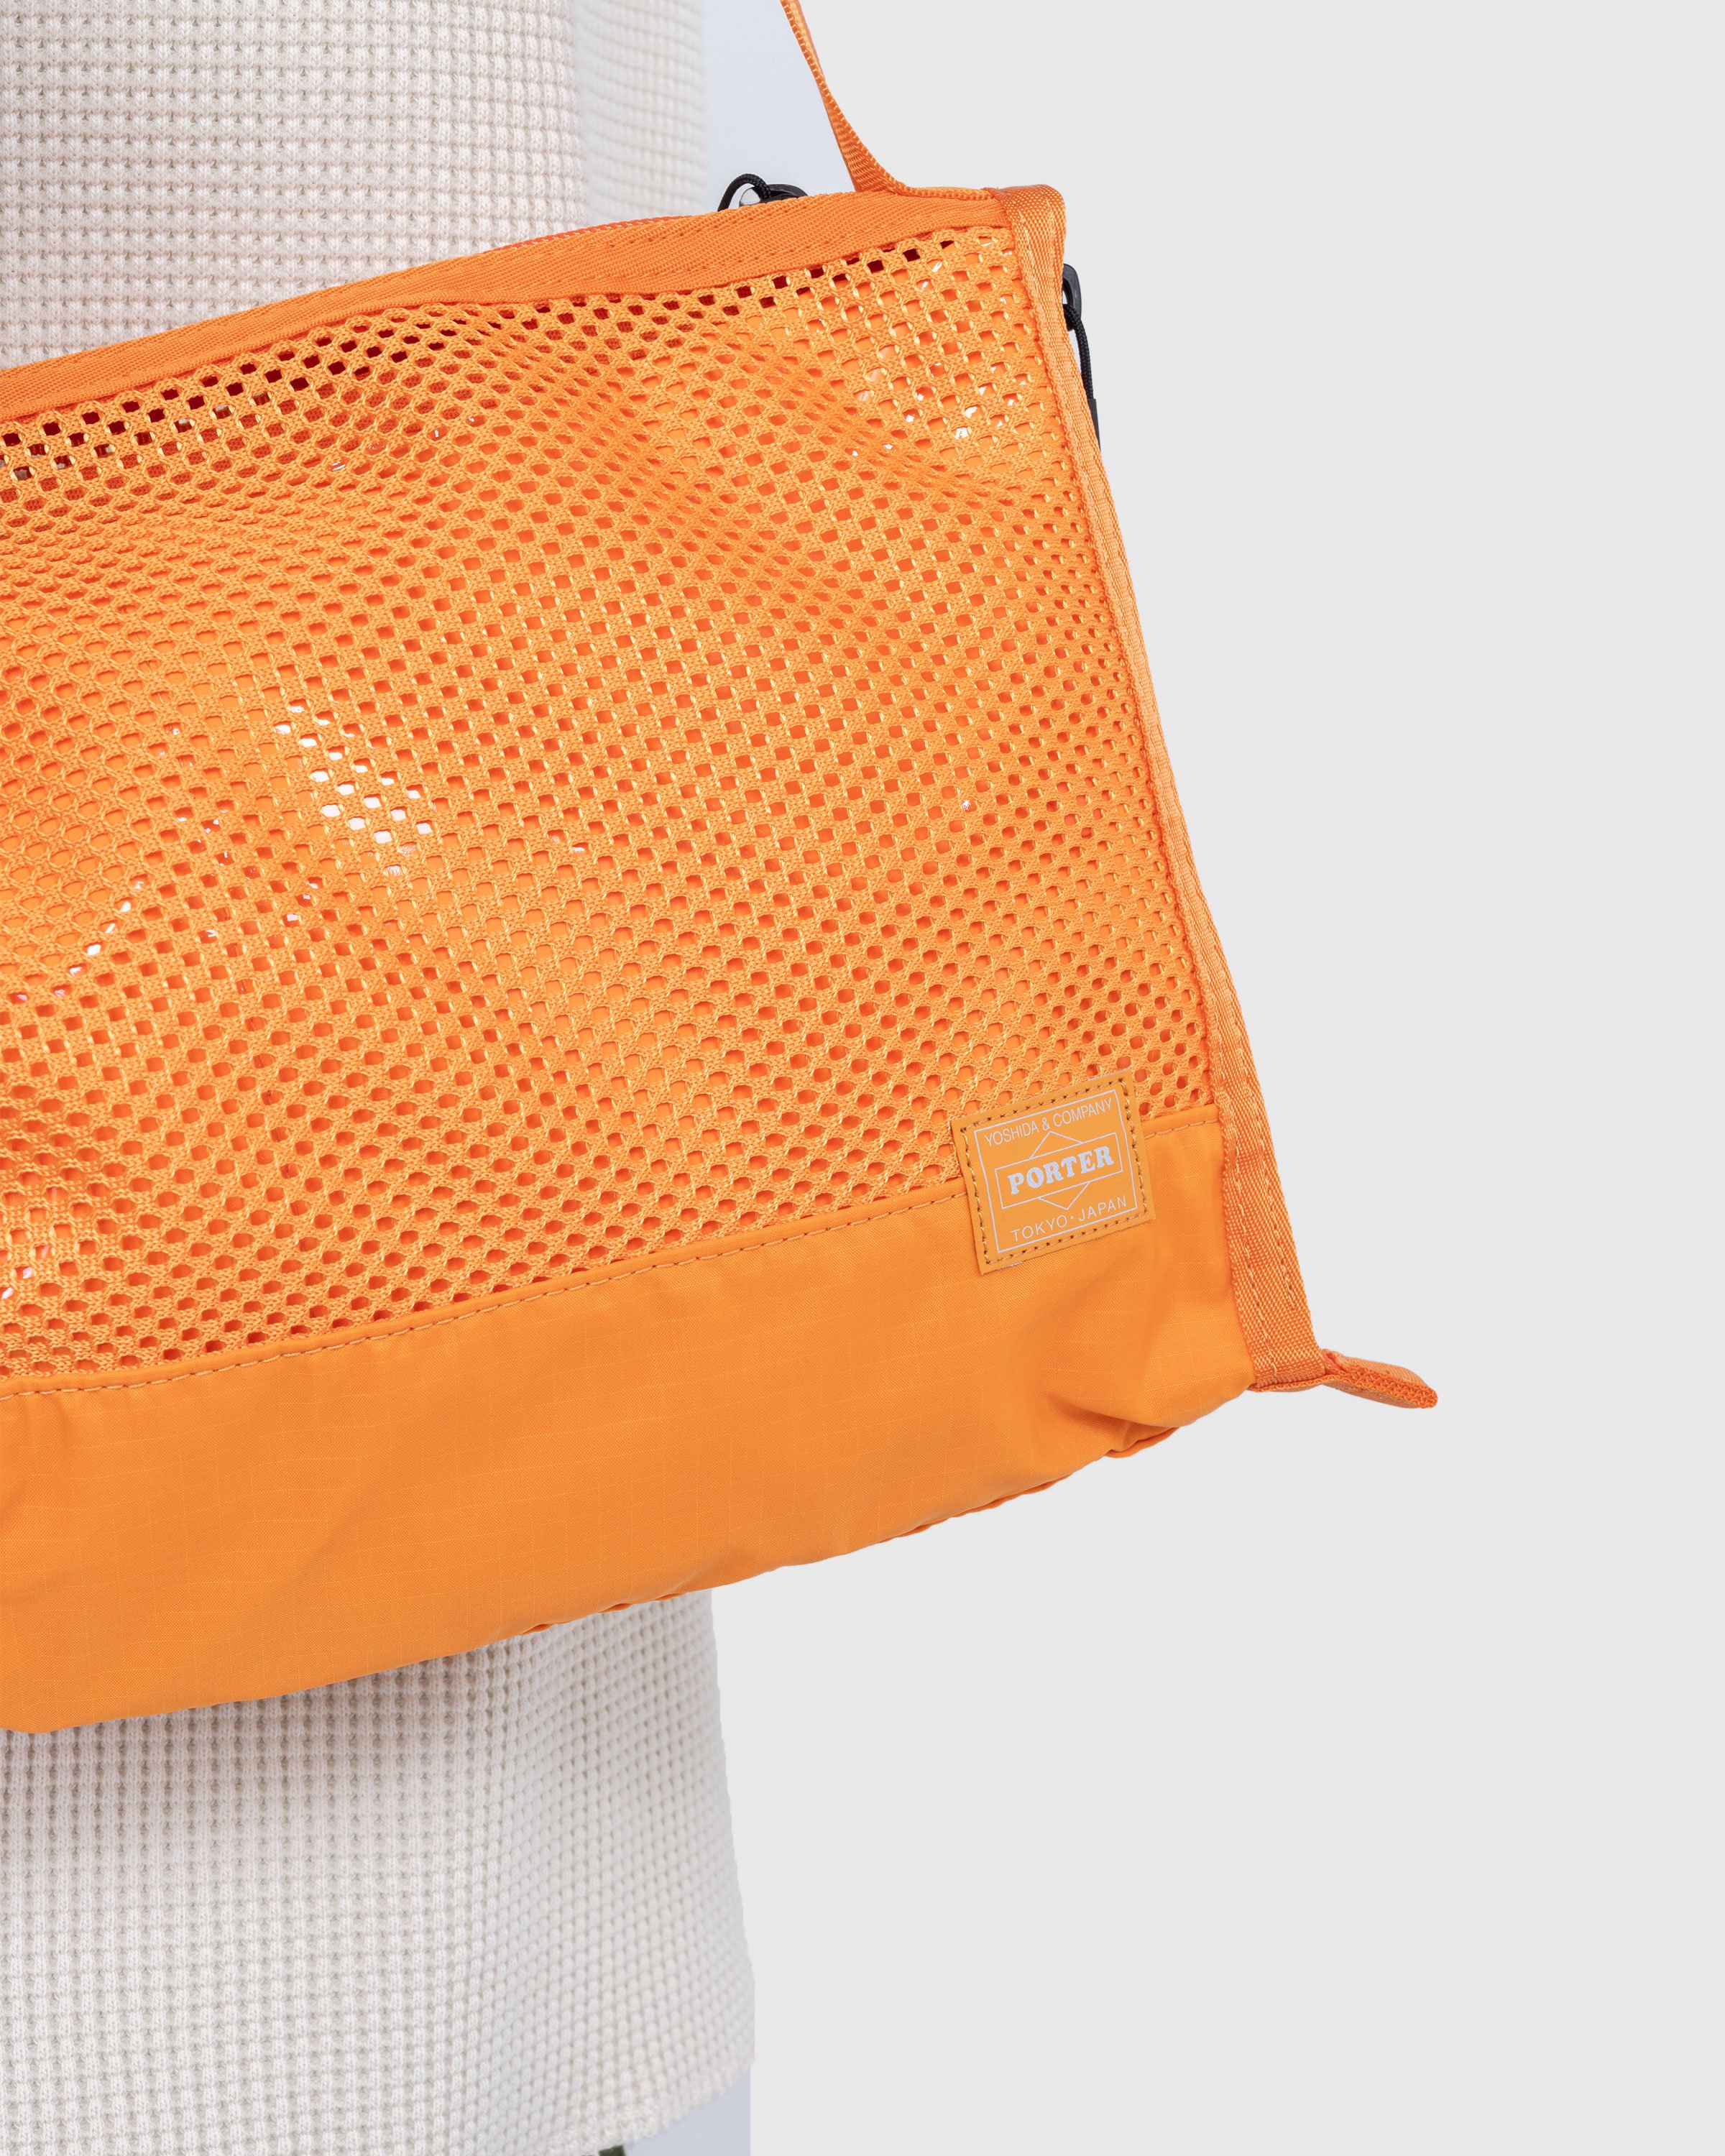 Porter-Yoshida & Co. - Screen Front Side Bag Orange - Accessories - Orange - Image 3